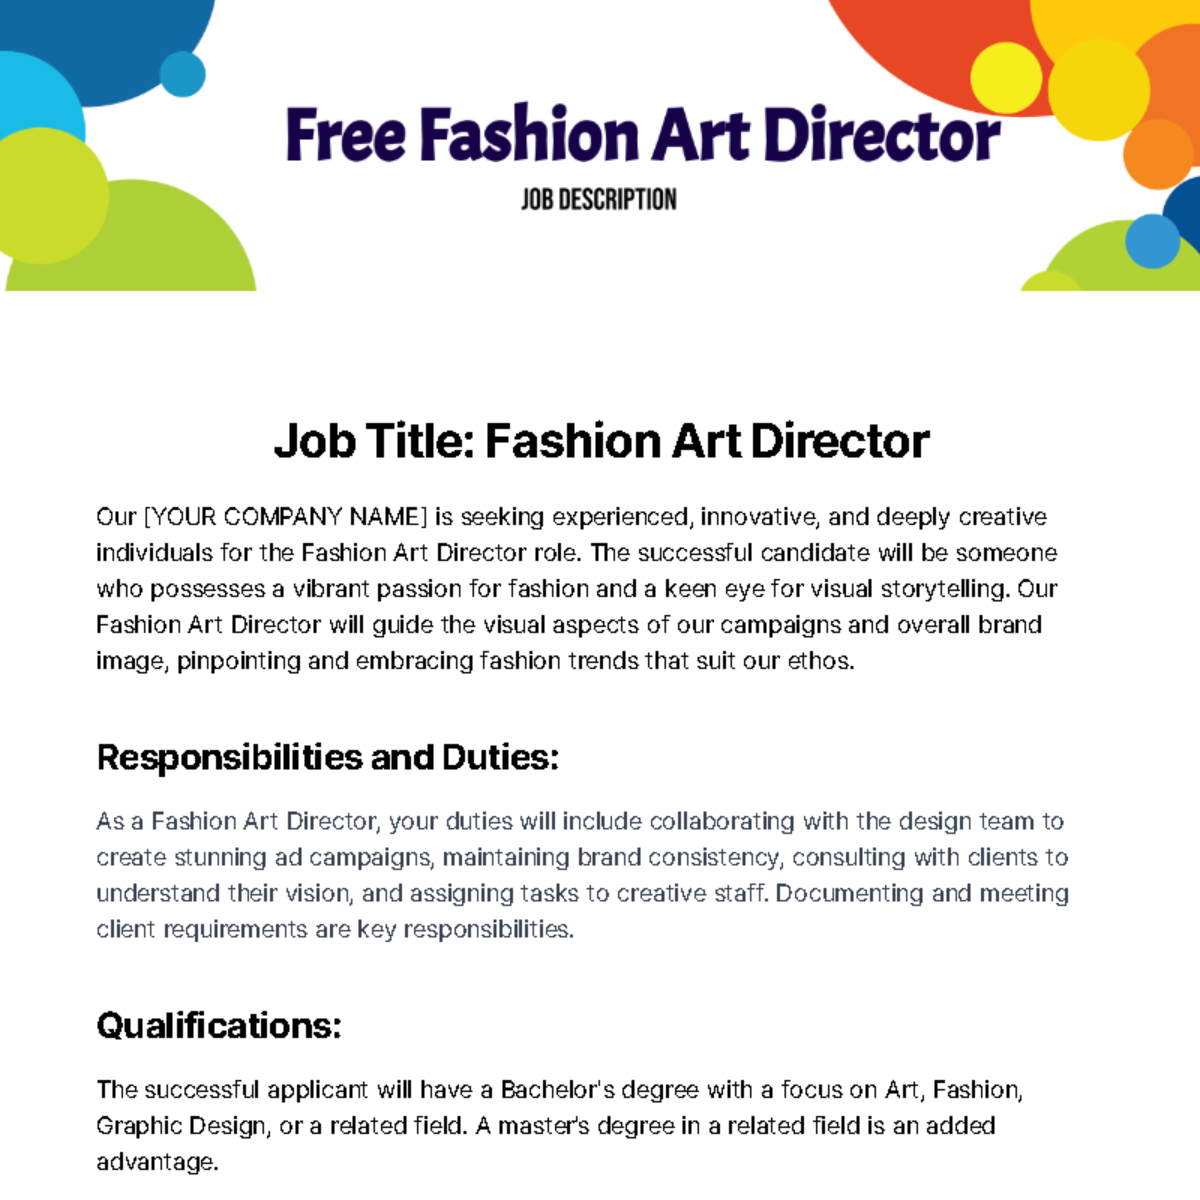 Free Fashion Art Director Job Description Template